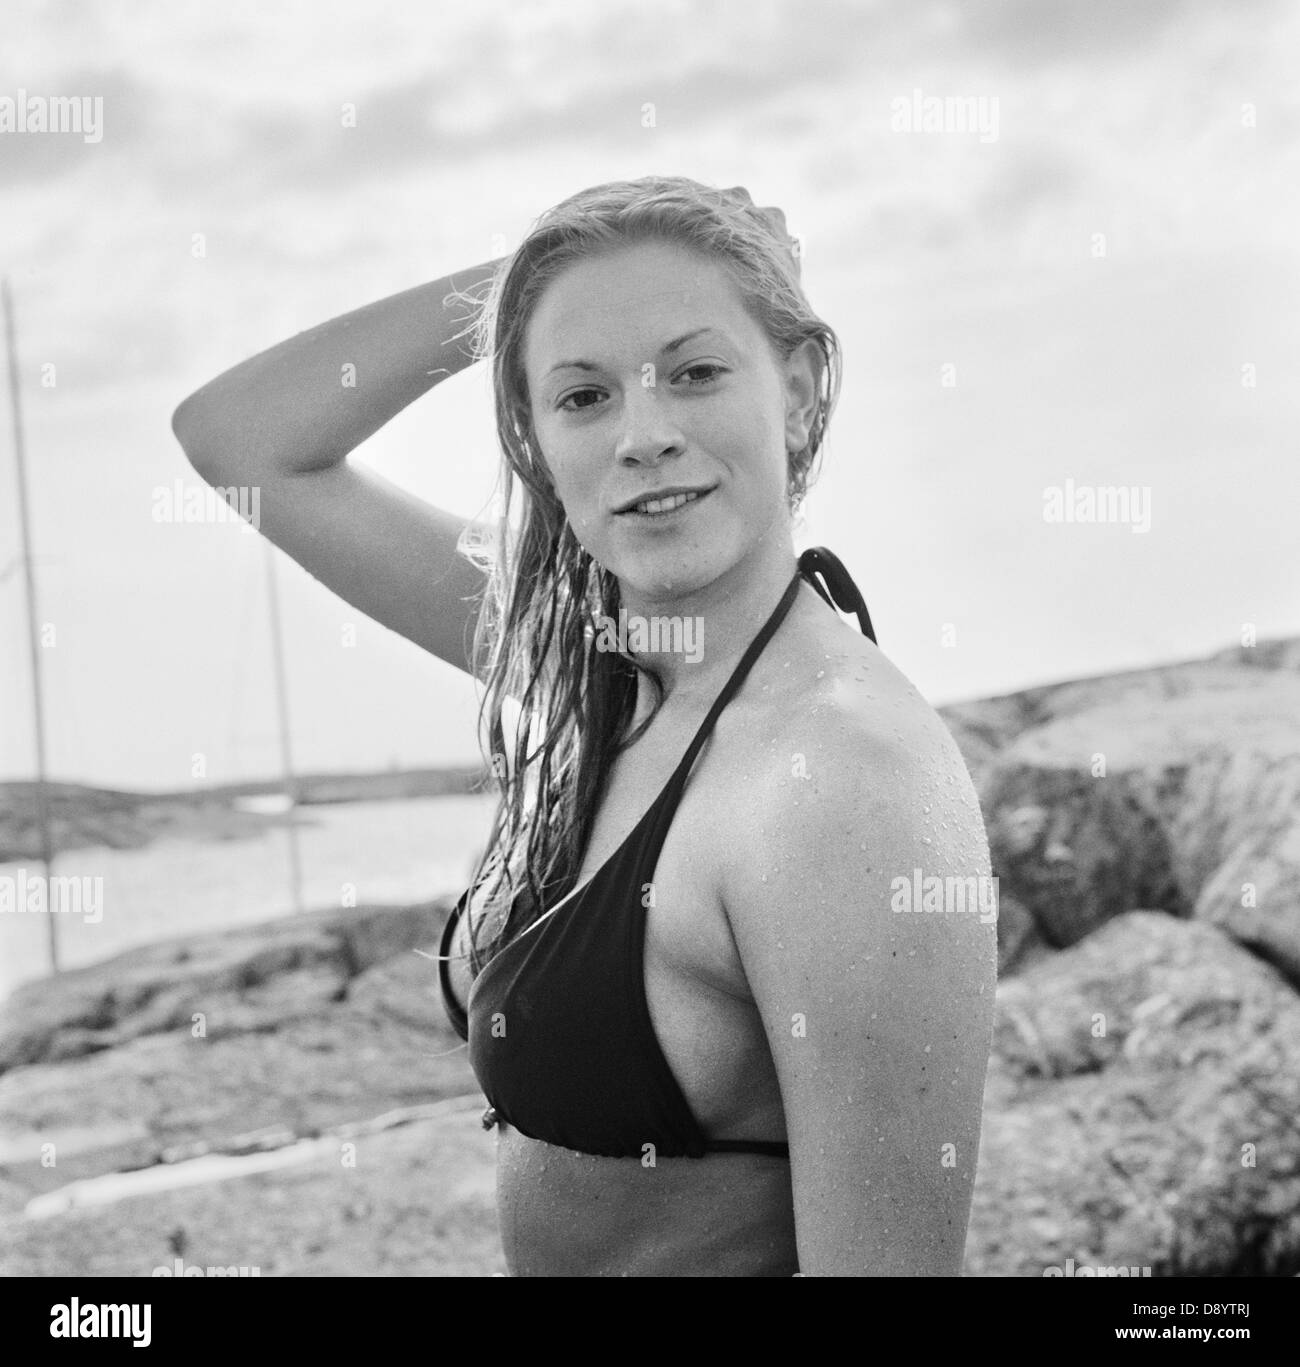 A young woman in bikini, Sweden. Stock Photo